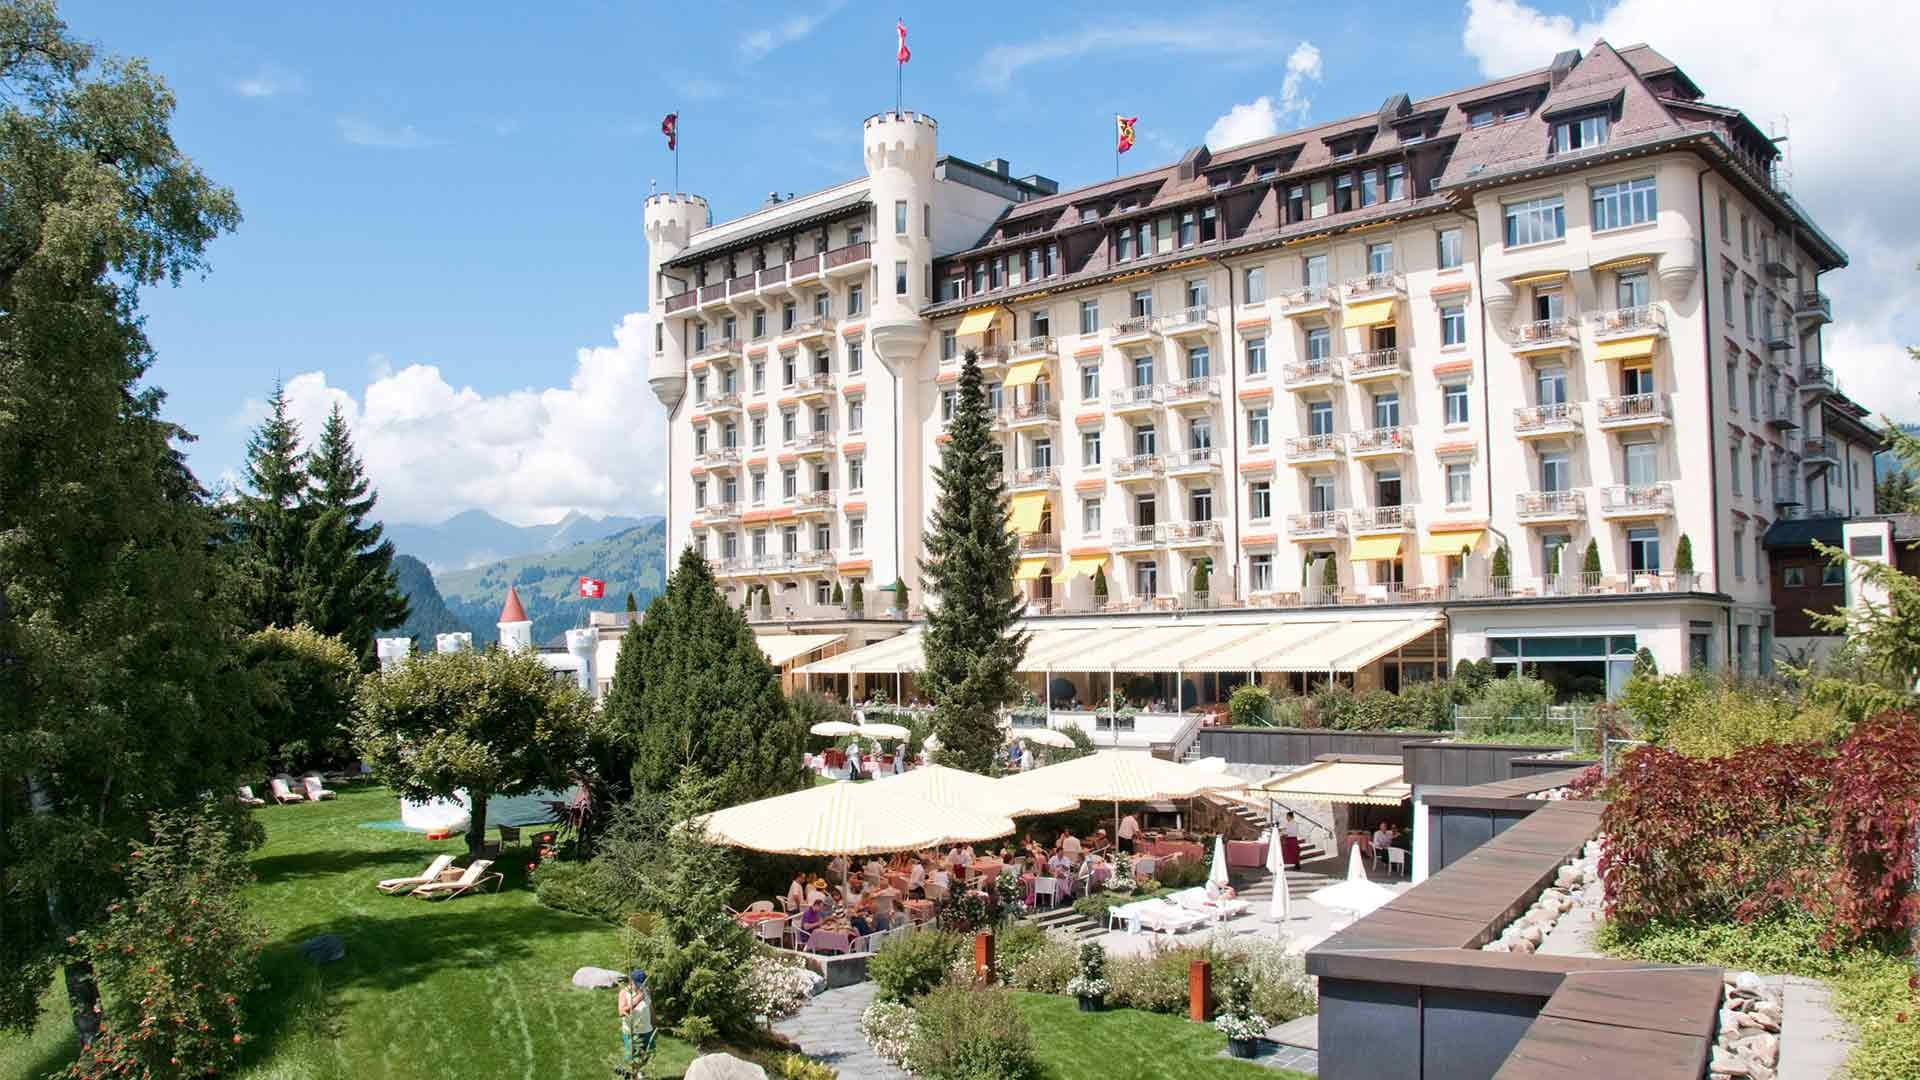 Palace Spa de Gstaad - slide